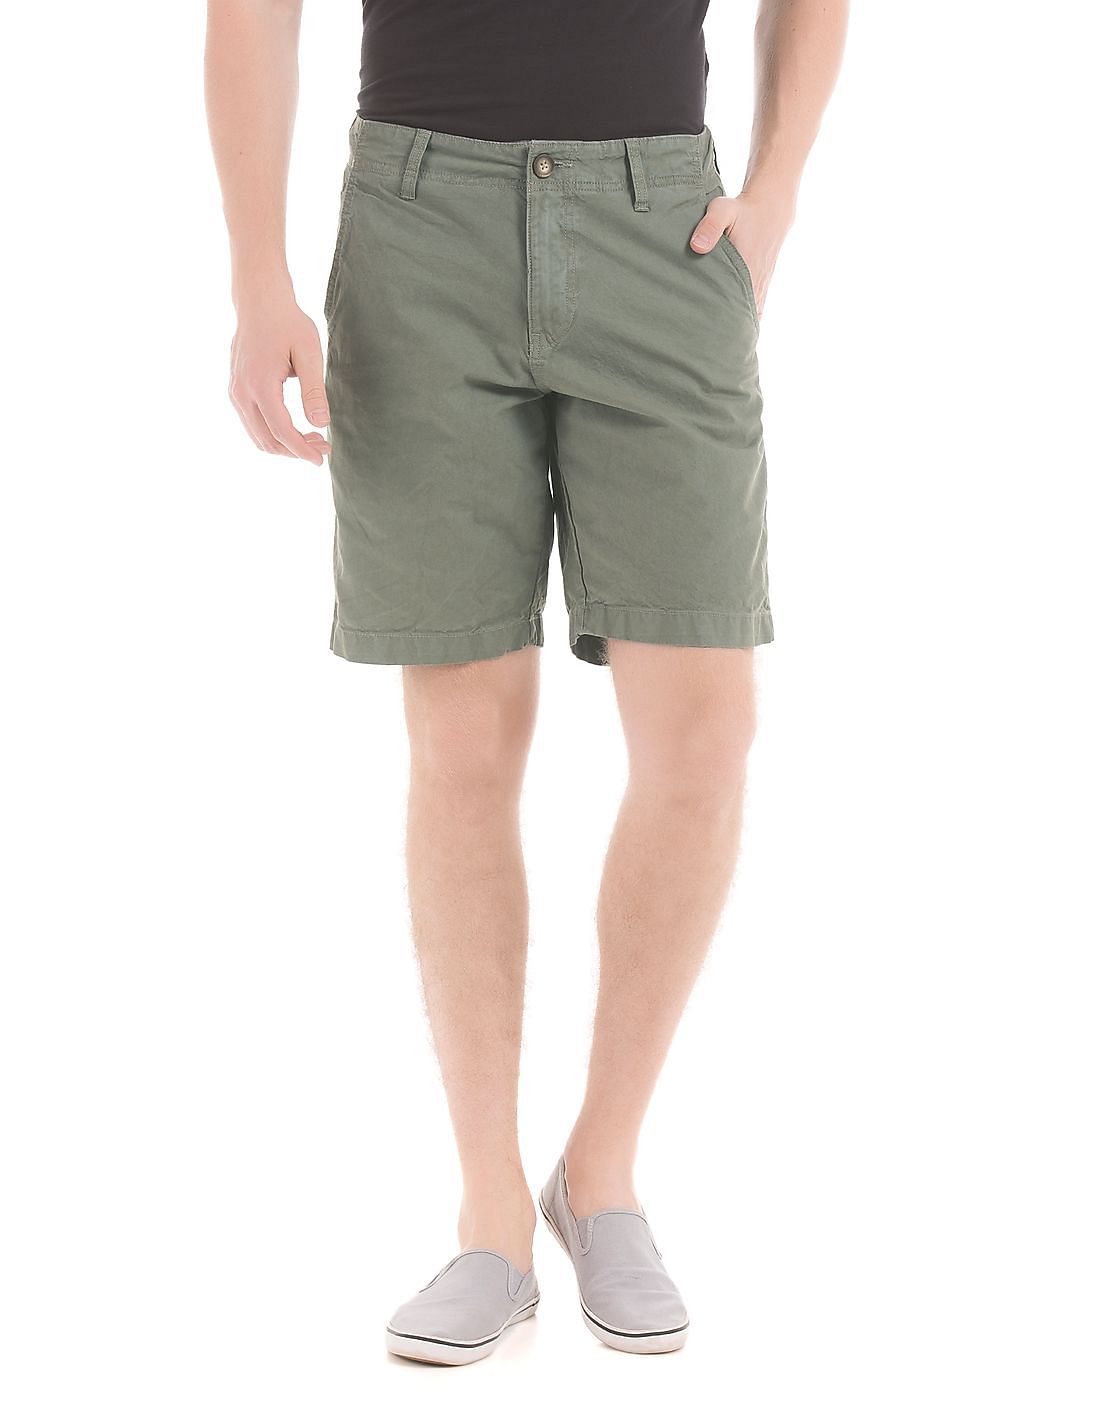 Buy Bayisland Men Flat Front Slim Fit Shorts - NNNOW.com